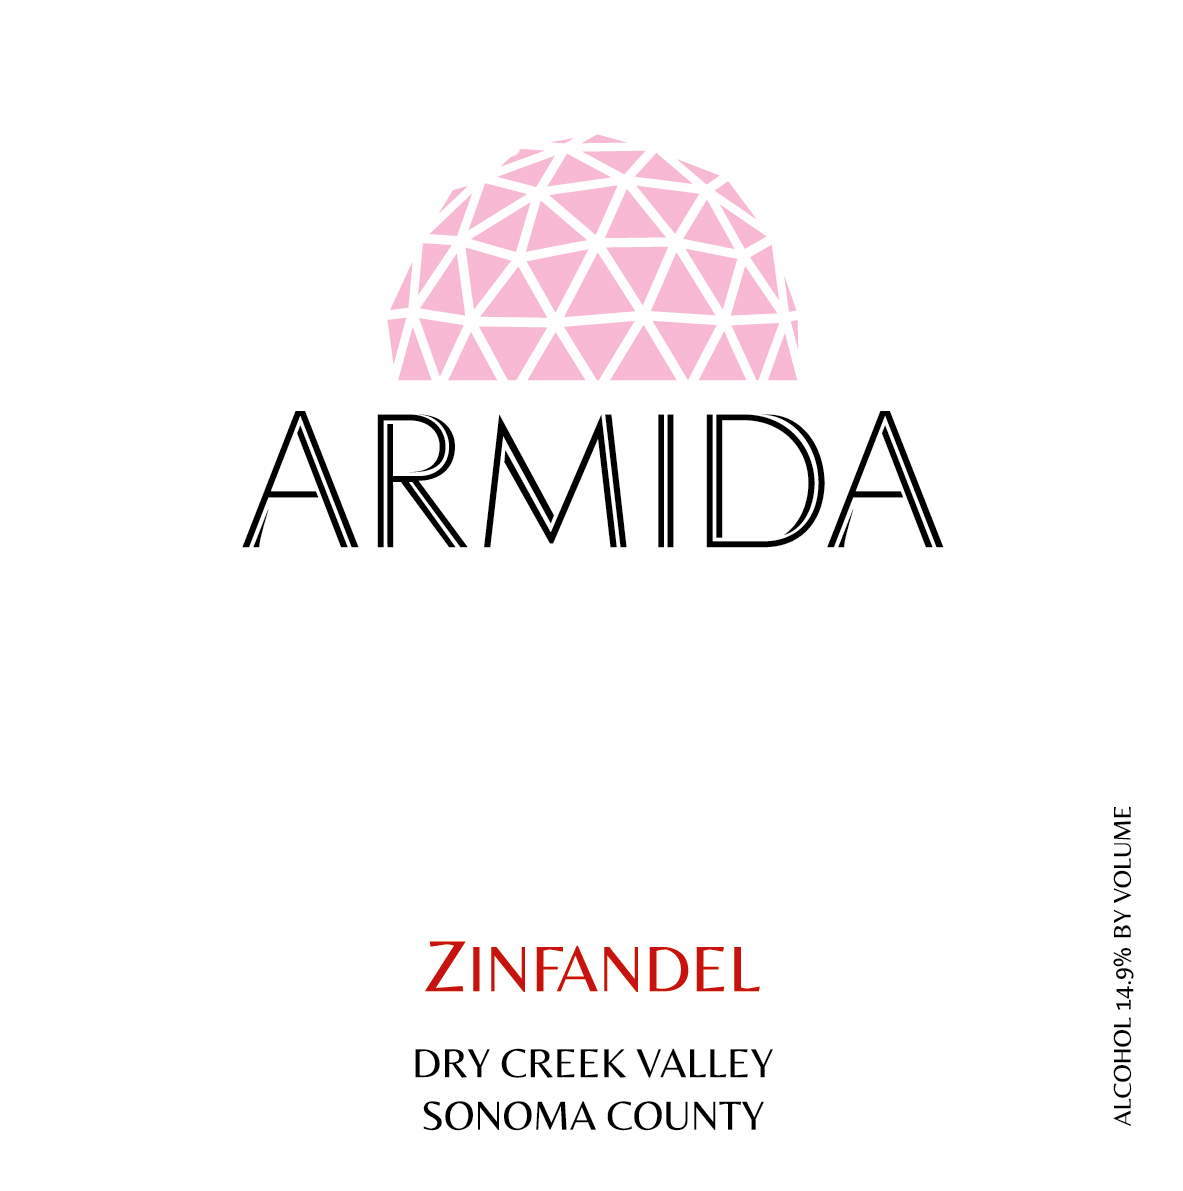 Armida - Zinfandel - Dry Creek Valley  label